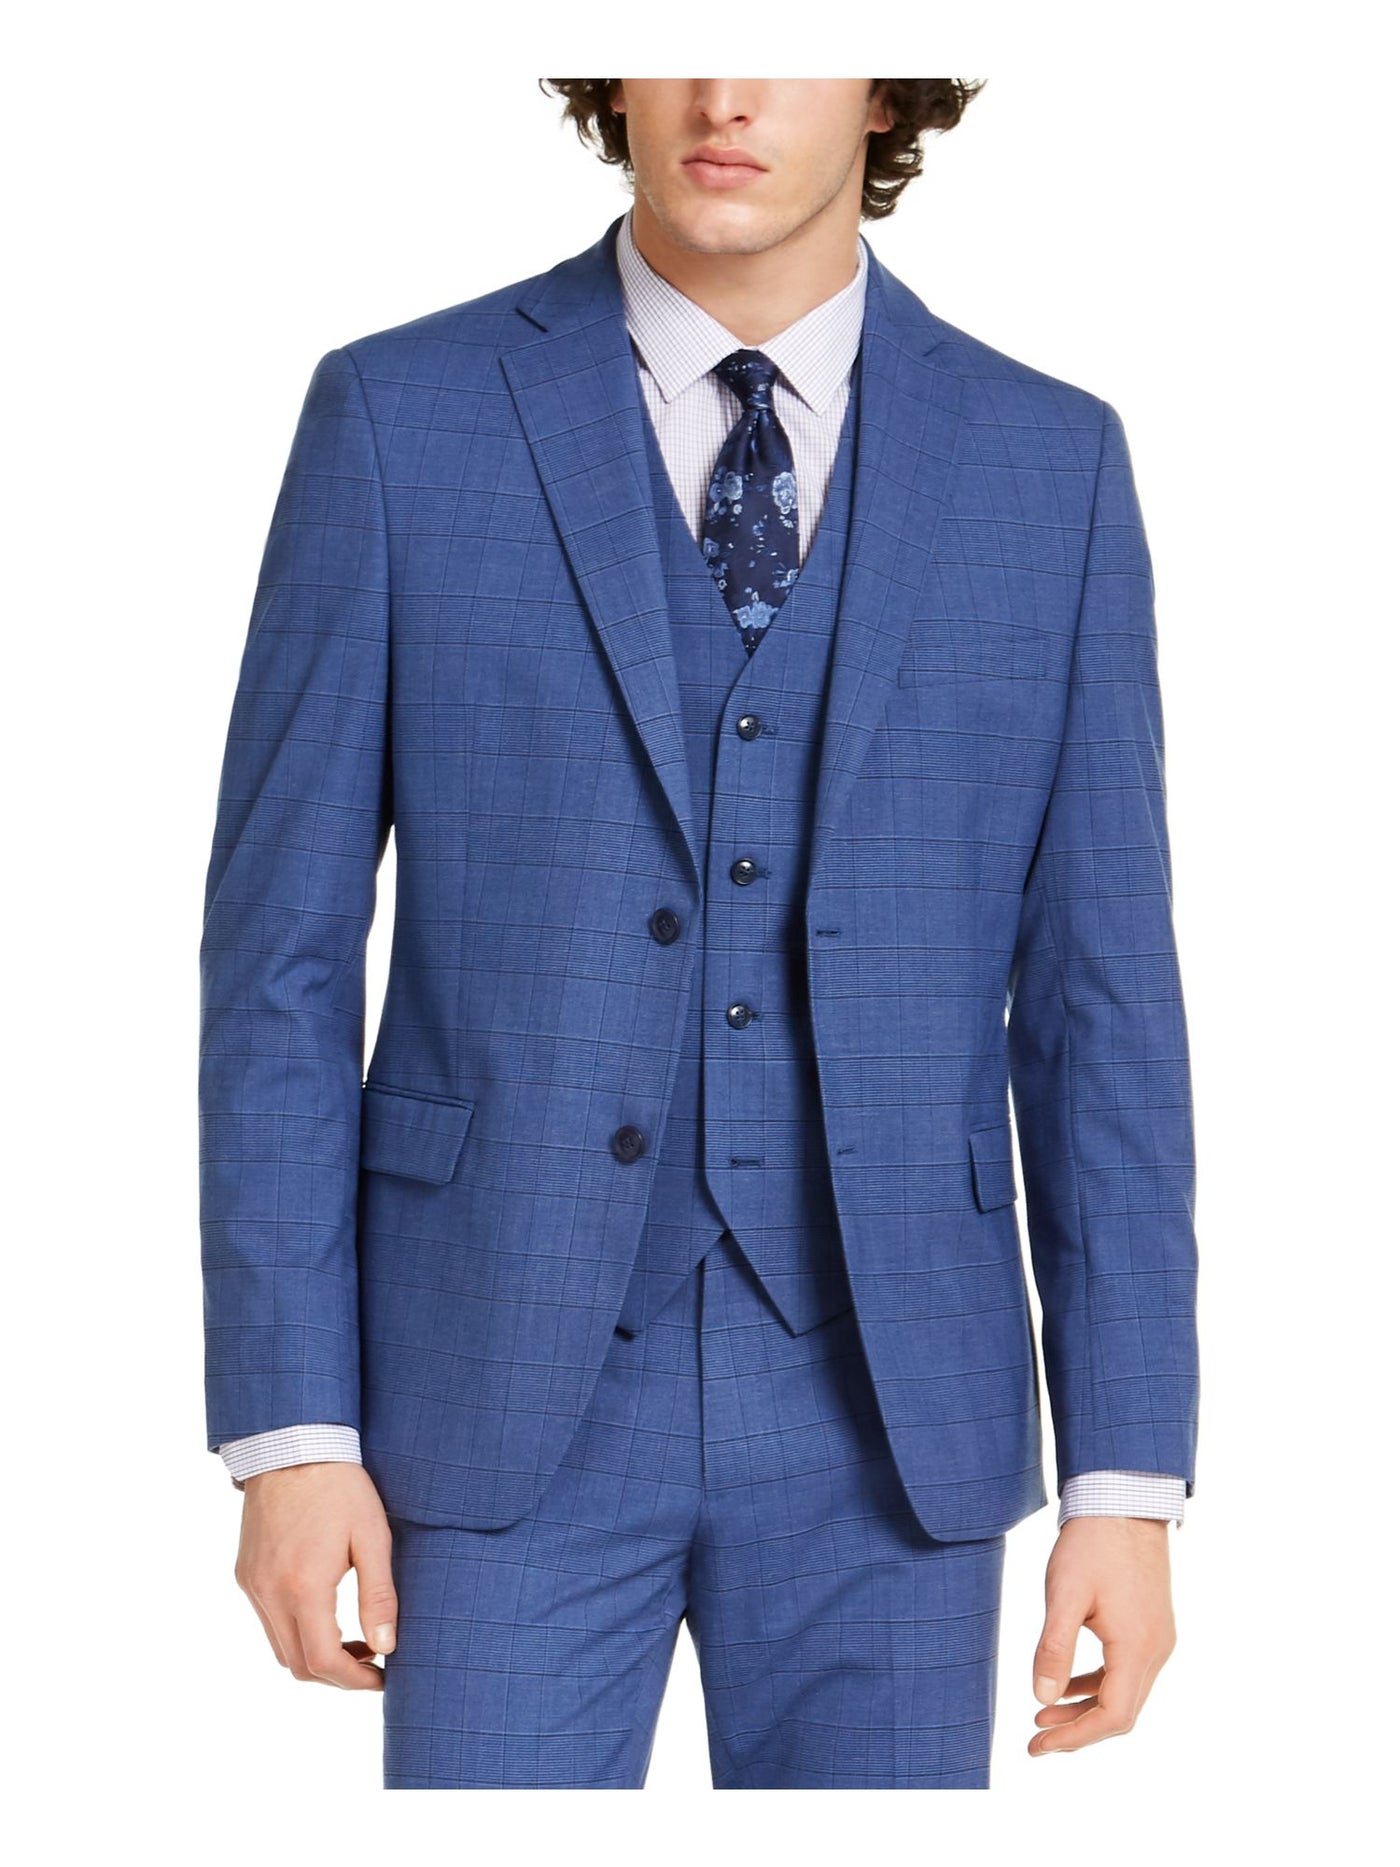 ALFANI Mens Blue Double Breasted, Windowpane Plaid Suit Jacket 36R